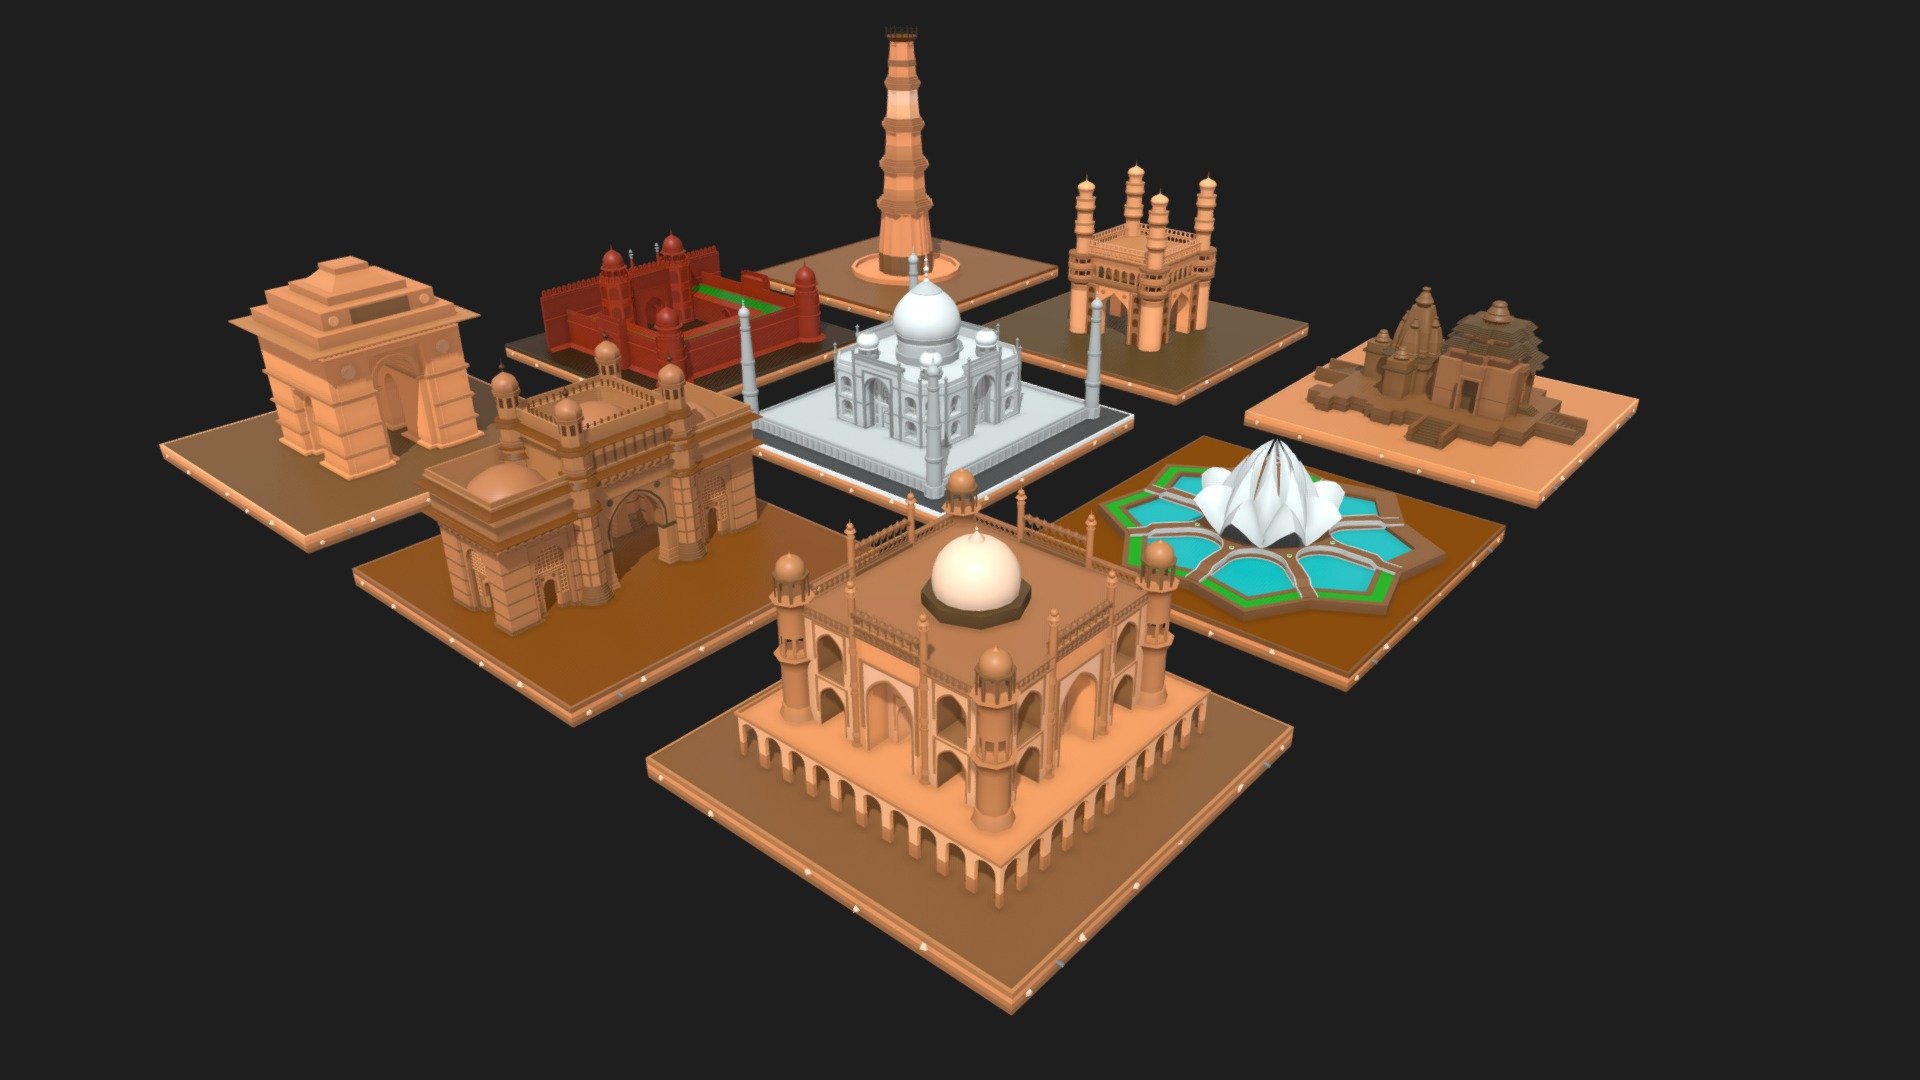 Taj Mahal

Gateway of India

India Gate

Qutub Minar

Lotus Temple

konark Temple

Charminar

Safdarjung Tomb - Low Poly Indian Monuments, Low-poly Landmarks 3D - Buy Royalty Free 3D model by Quaint Game Studio (@quaintgames) 3d model